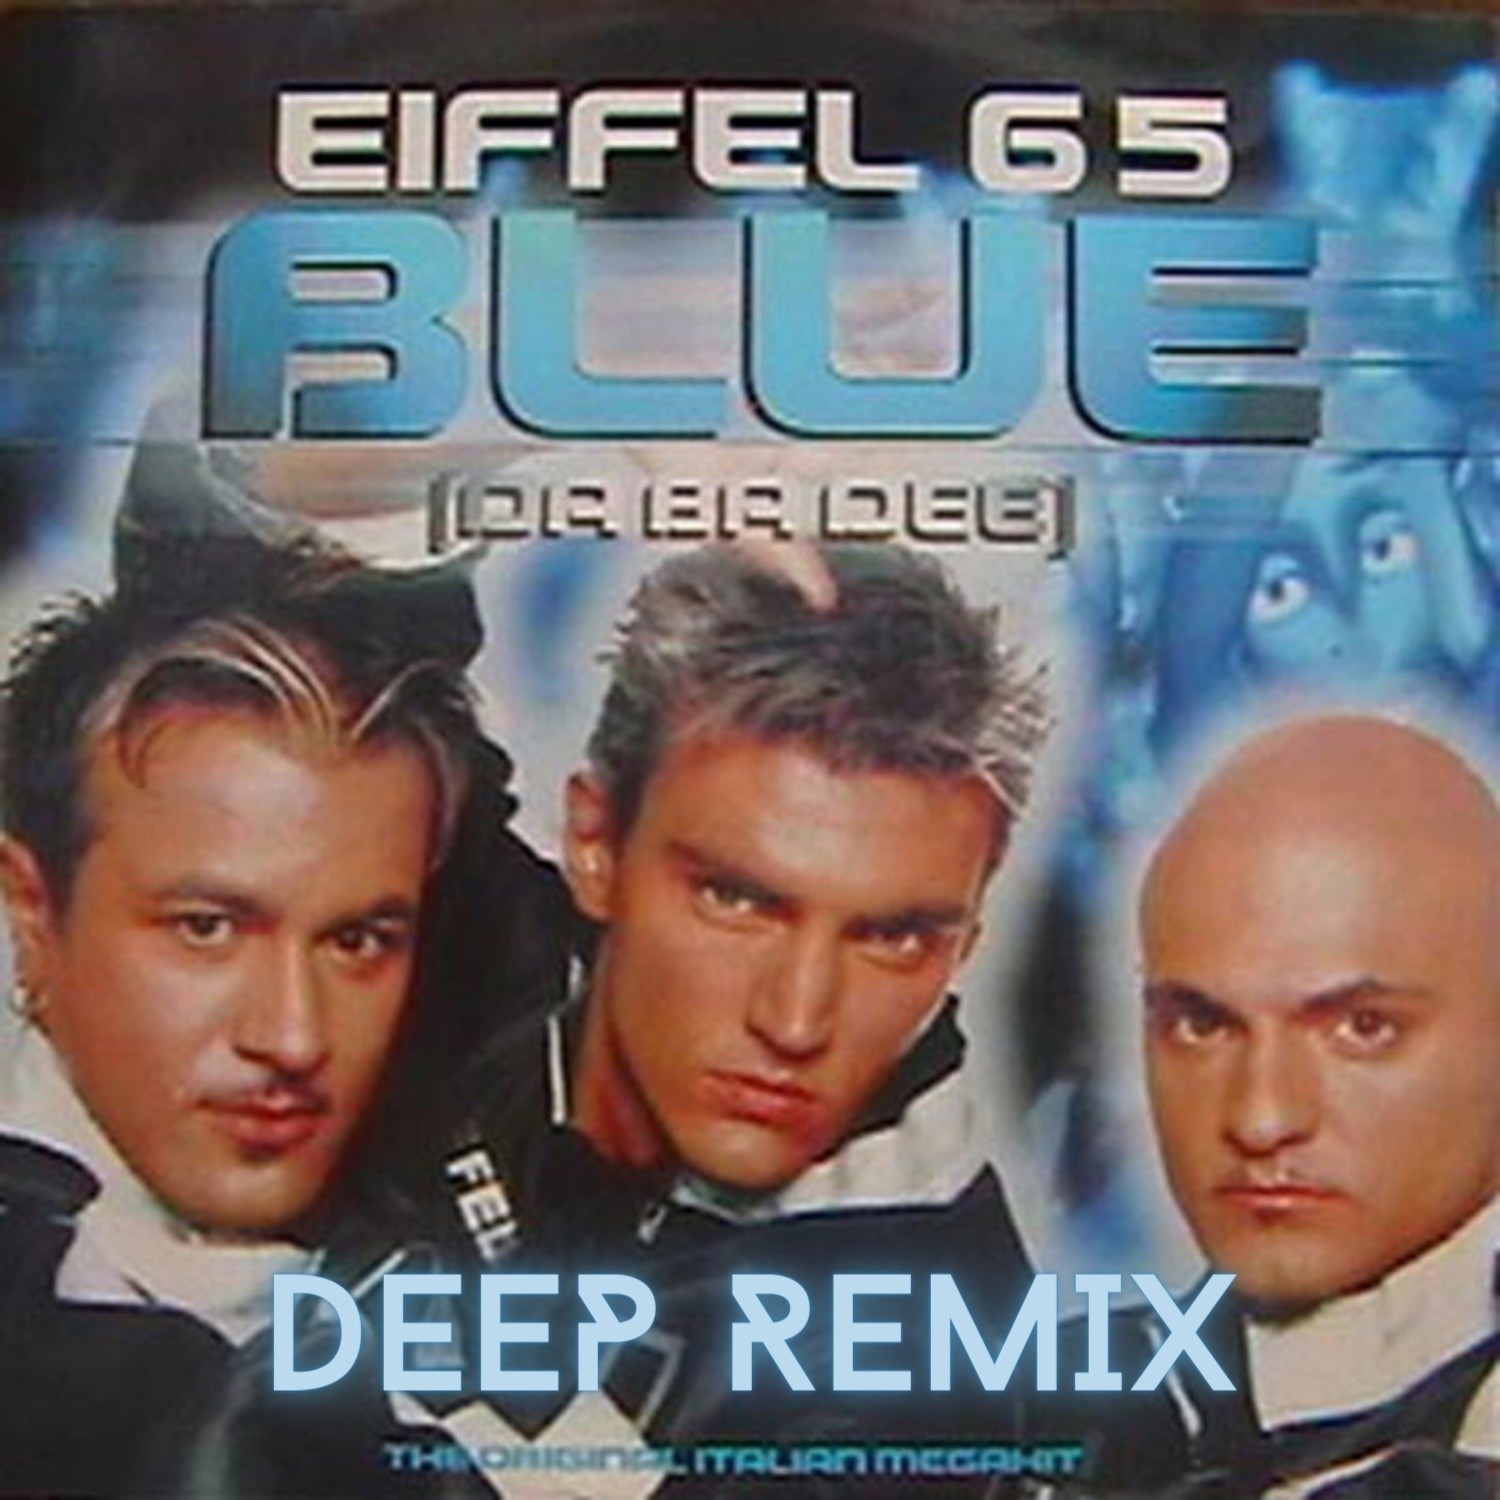 65 в группа 1. Группа Eiffel 65. Eiffel 65 обложка. Eiffel 65 2021. Eiffel 65 Blue da ba Dee.